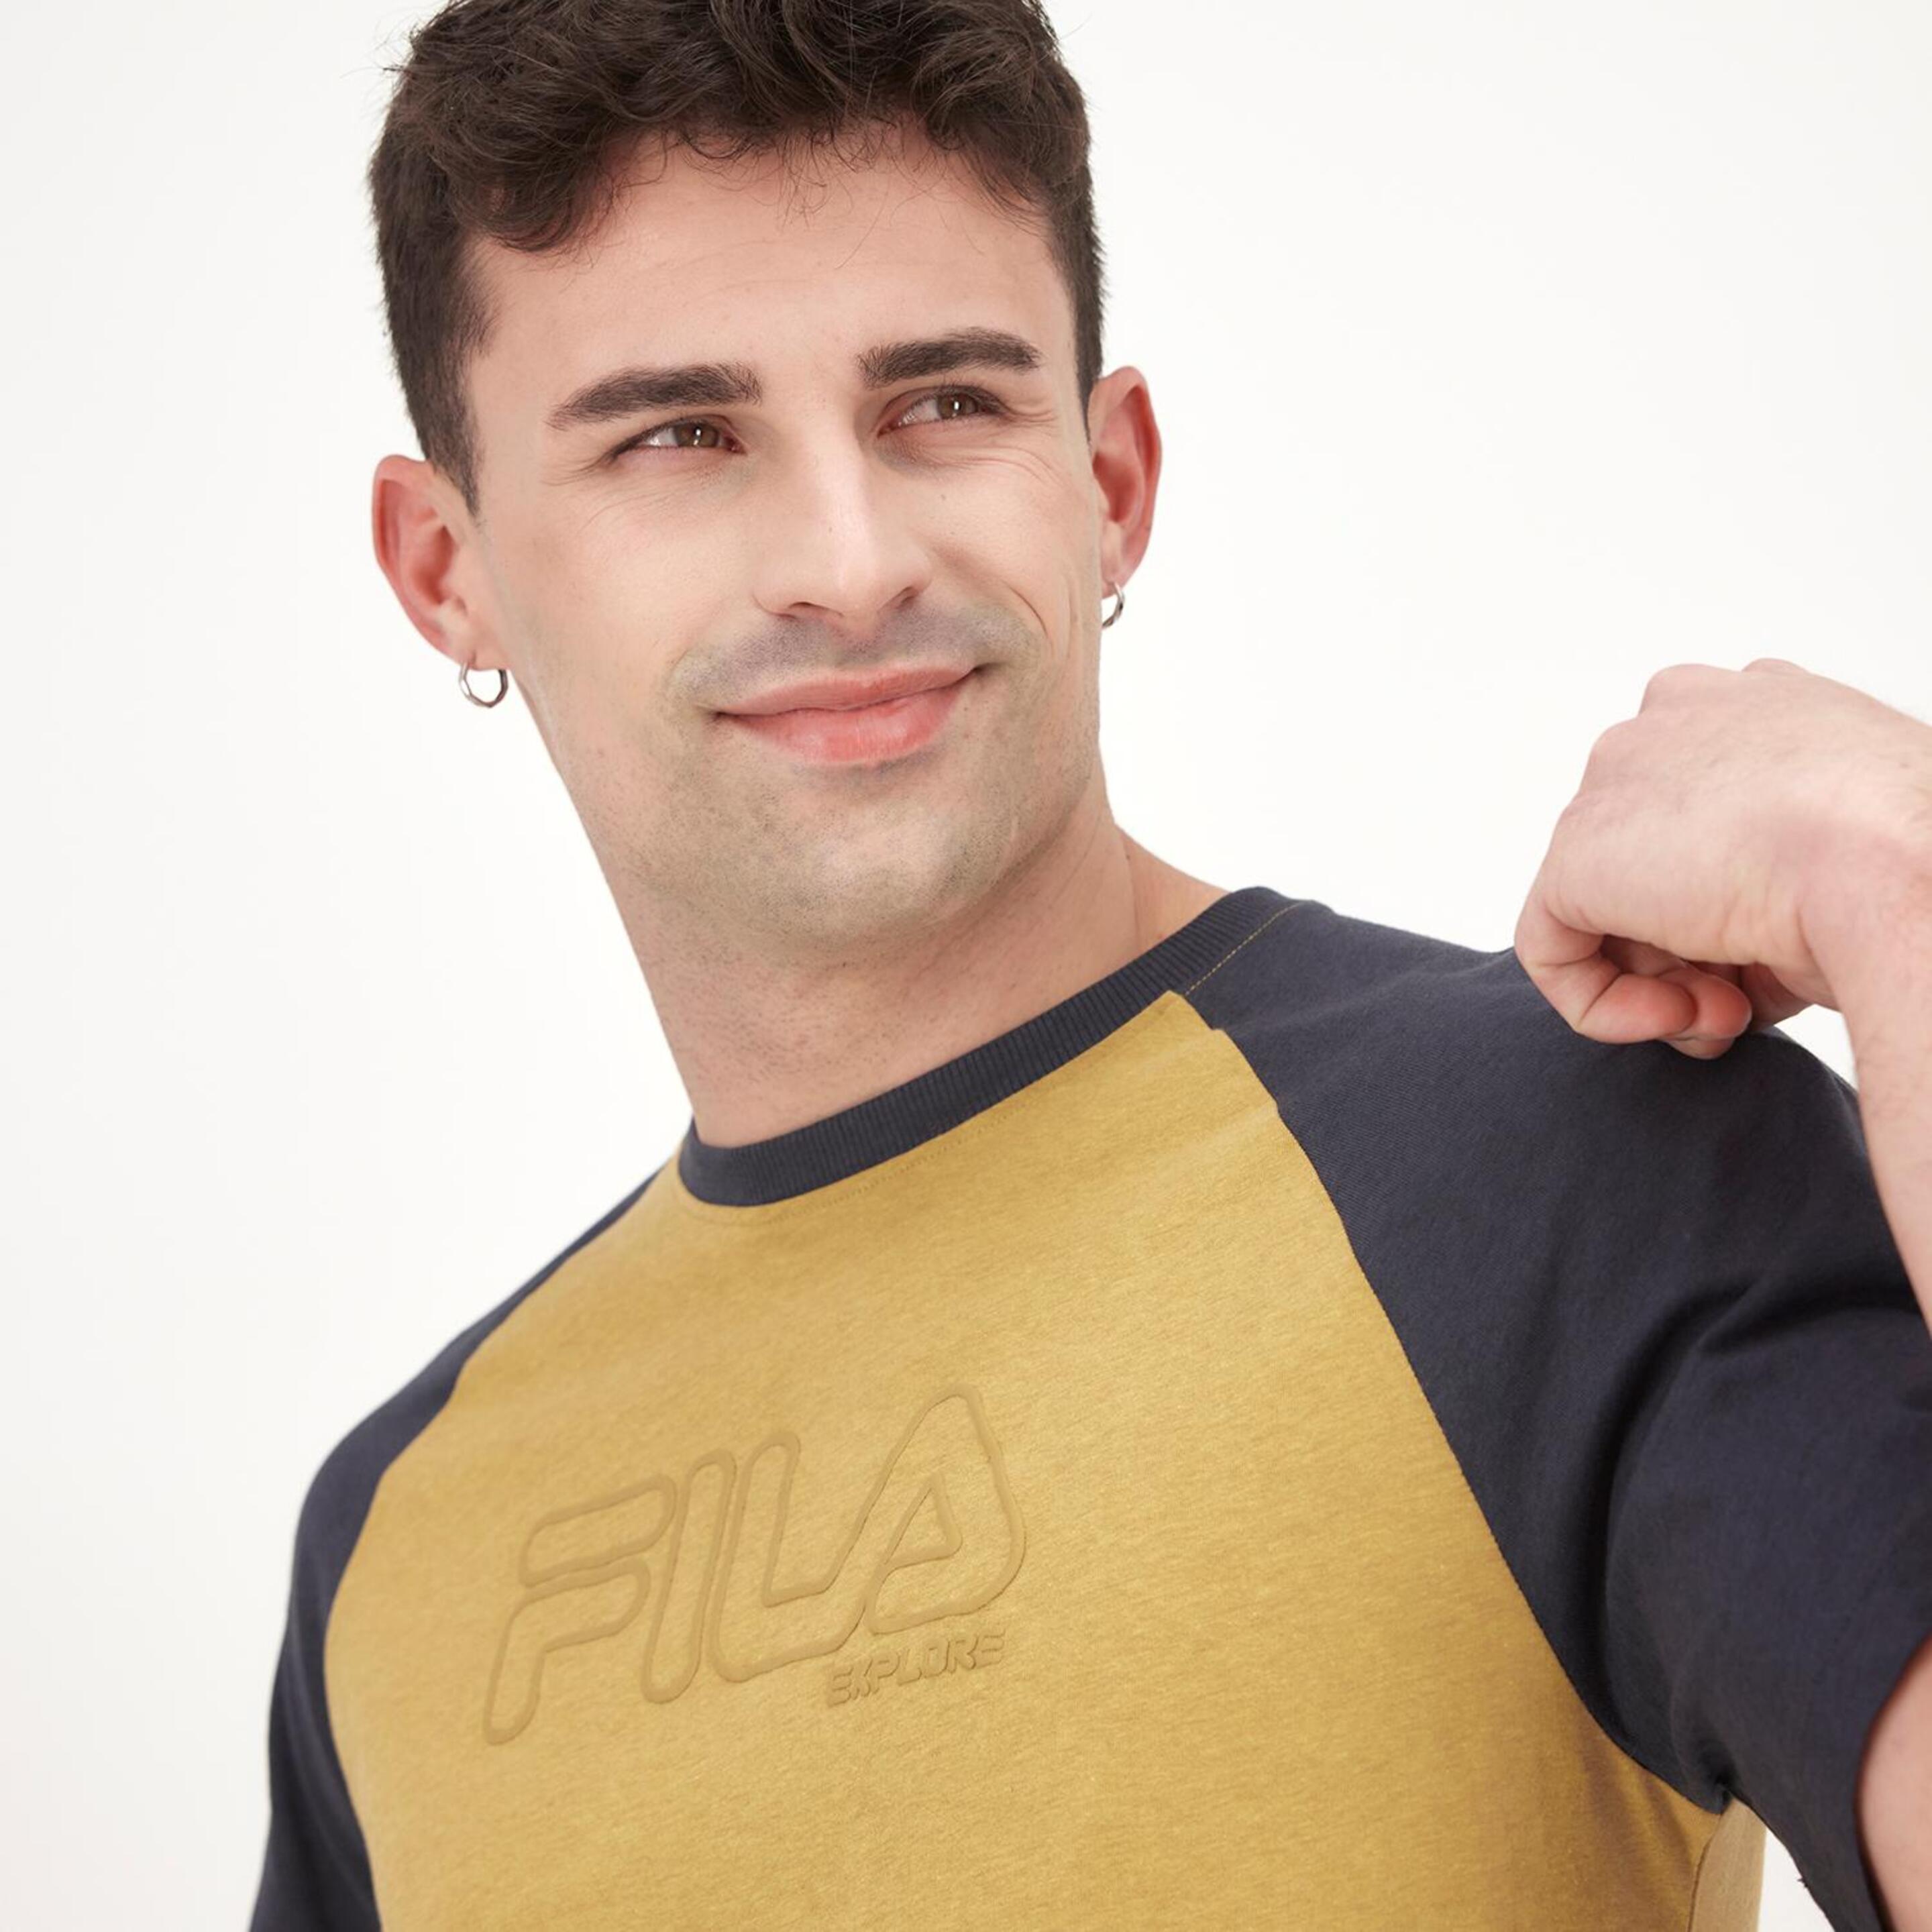 Camiseta Fila - Camel - Camiseta Trekking Hombre